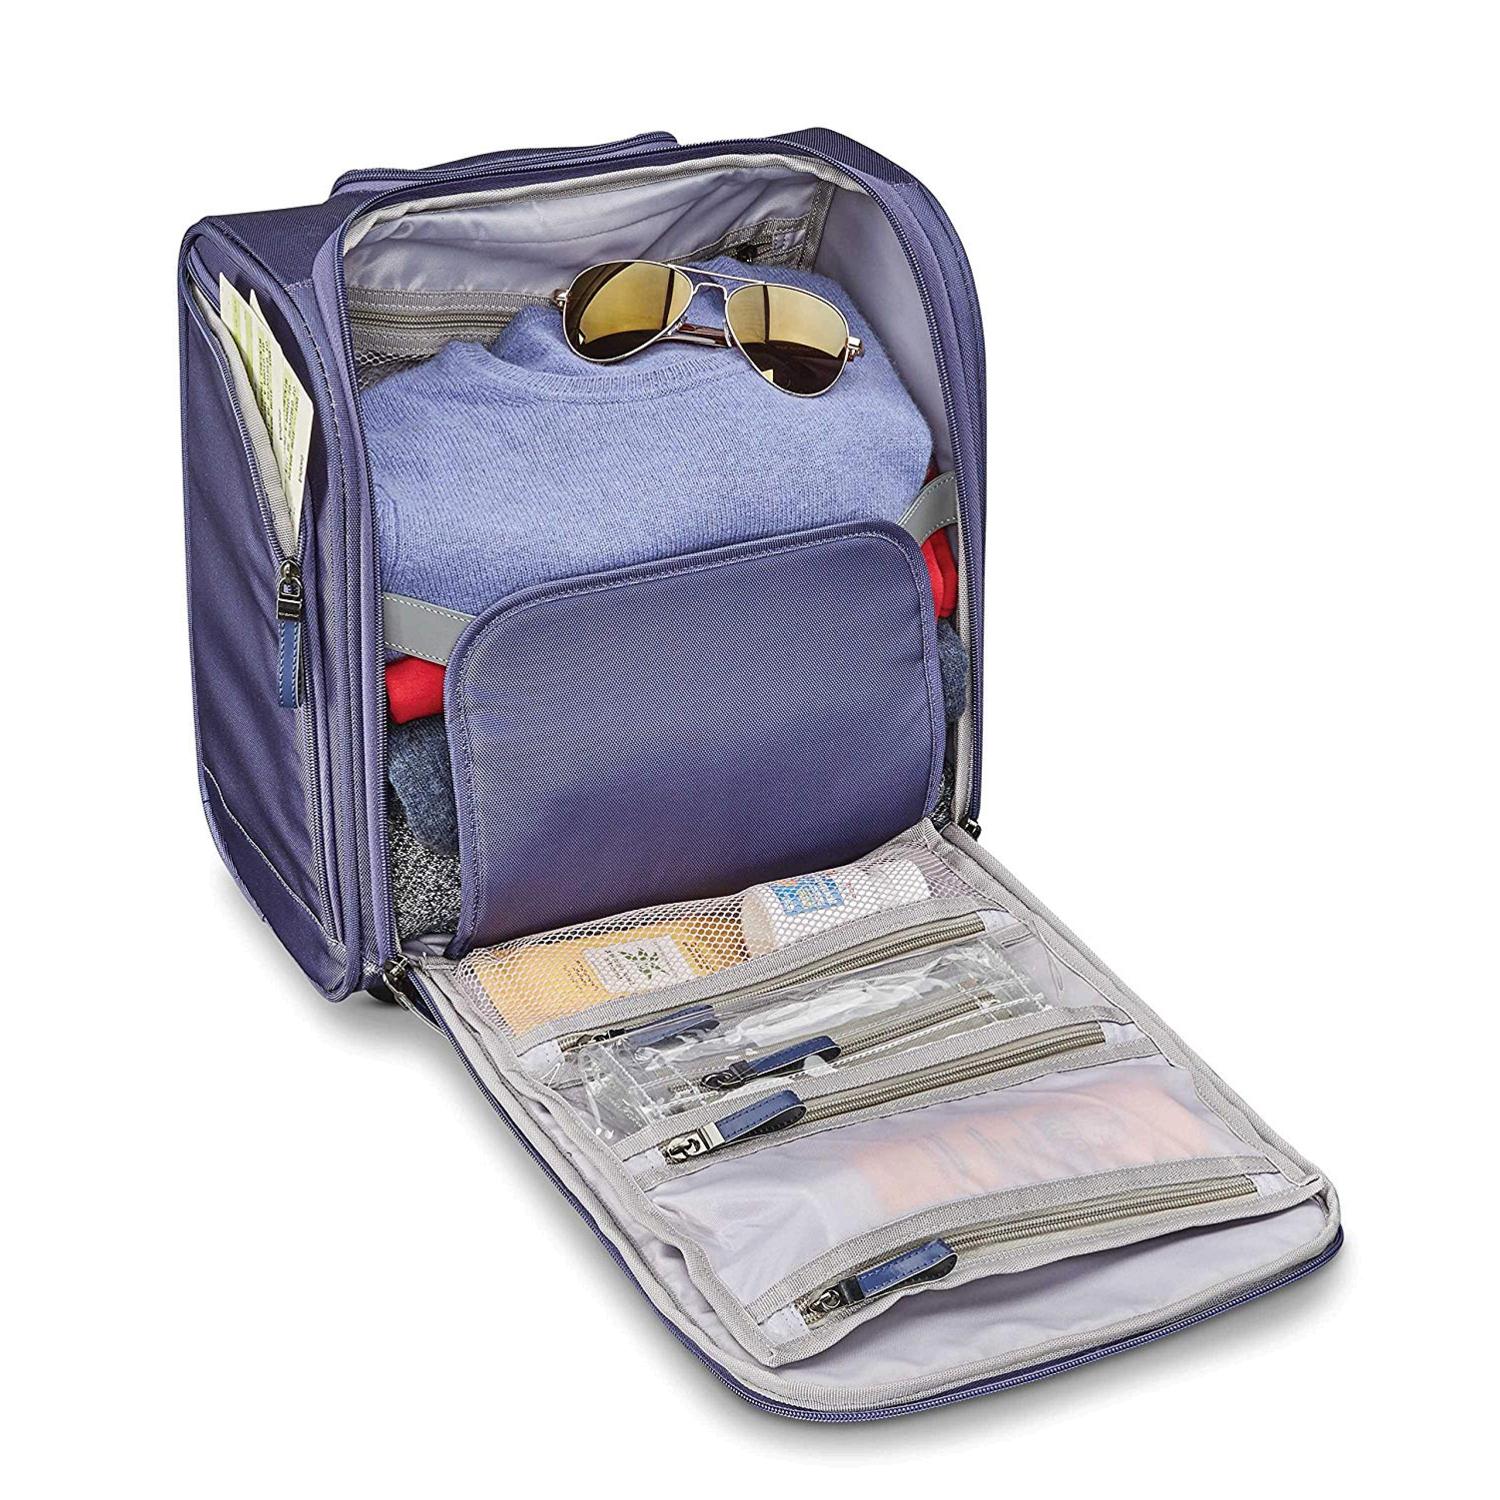 Samsonite Small Underseat Carry-On Luggage, Purple, Purple Cloud, Size One Size | eBay